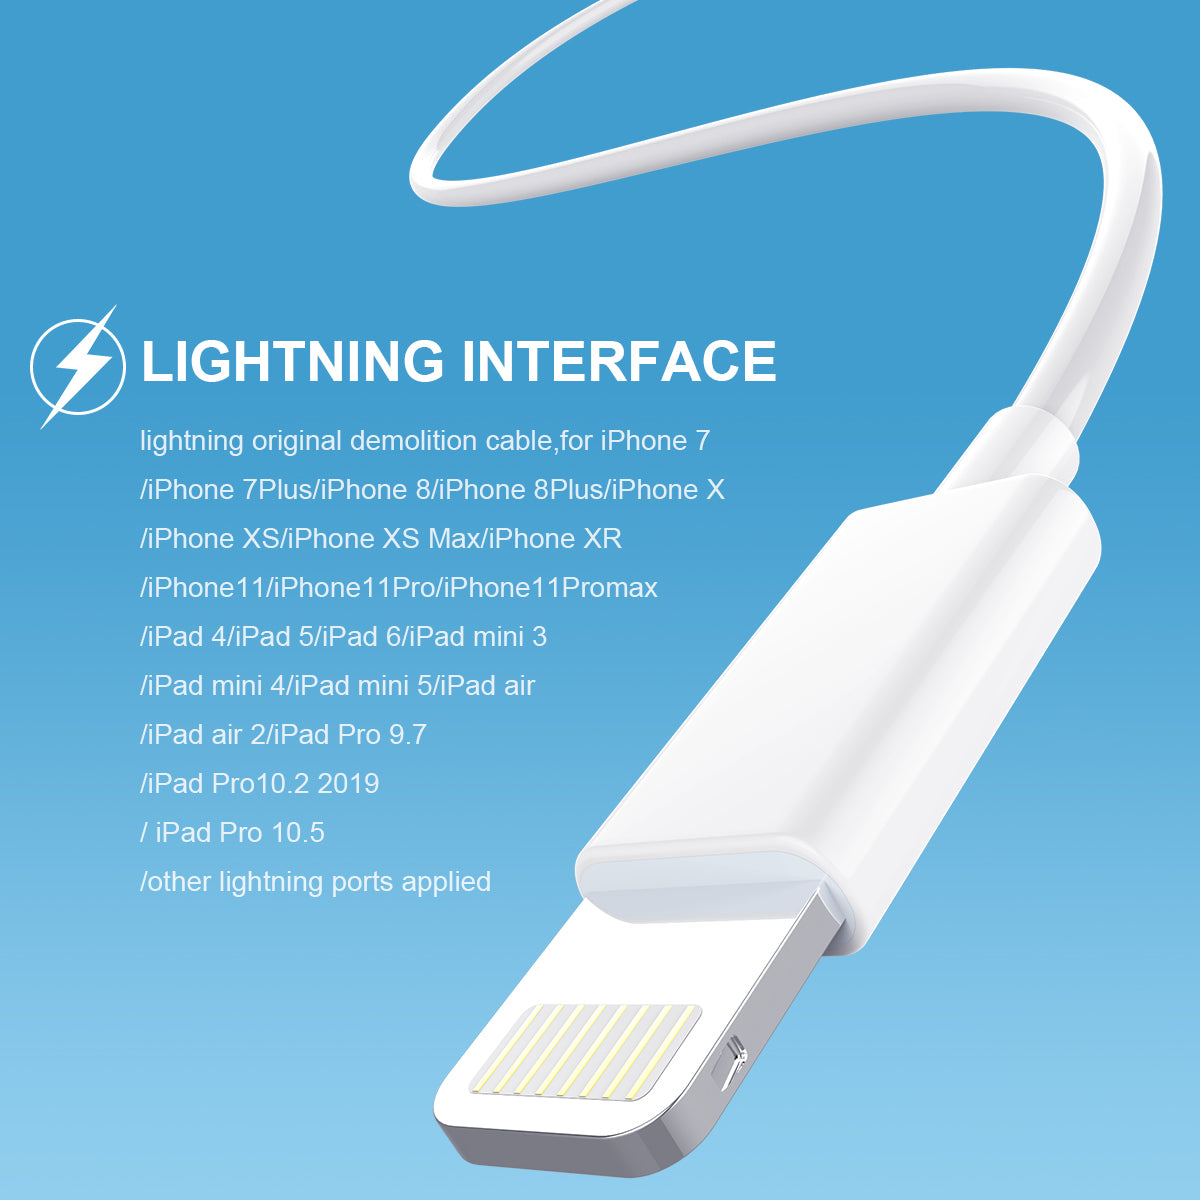 Adaptador Micro USB a Apple Lightning